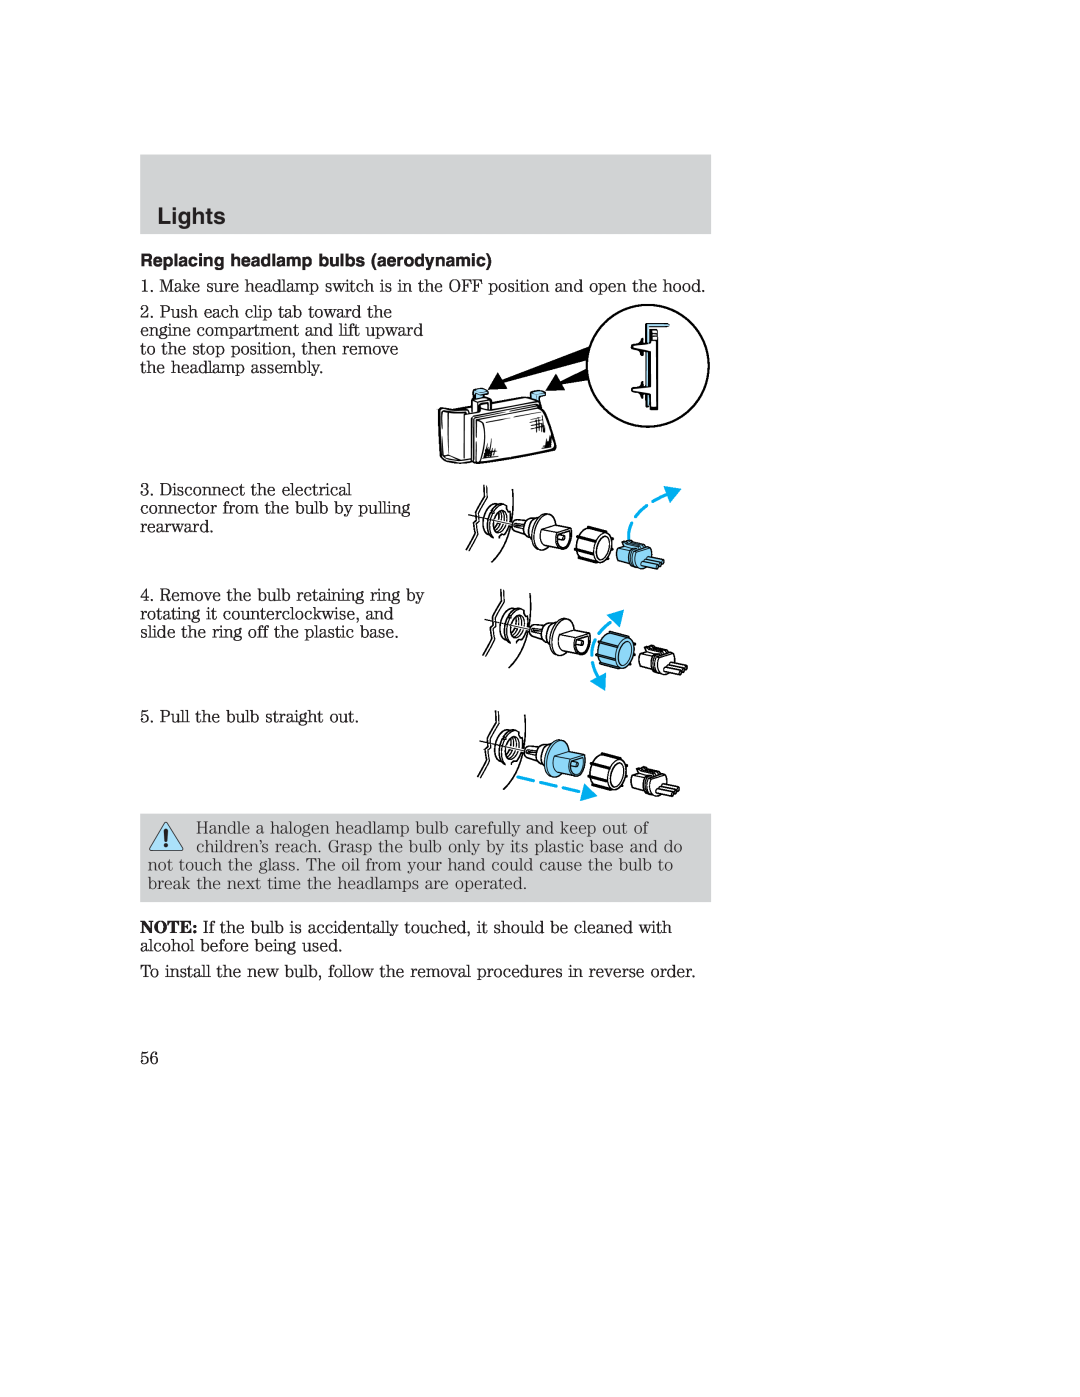 Ford AM/FM stereo manual Replacing headlamp bulbs aerodynamic, Lights 